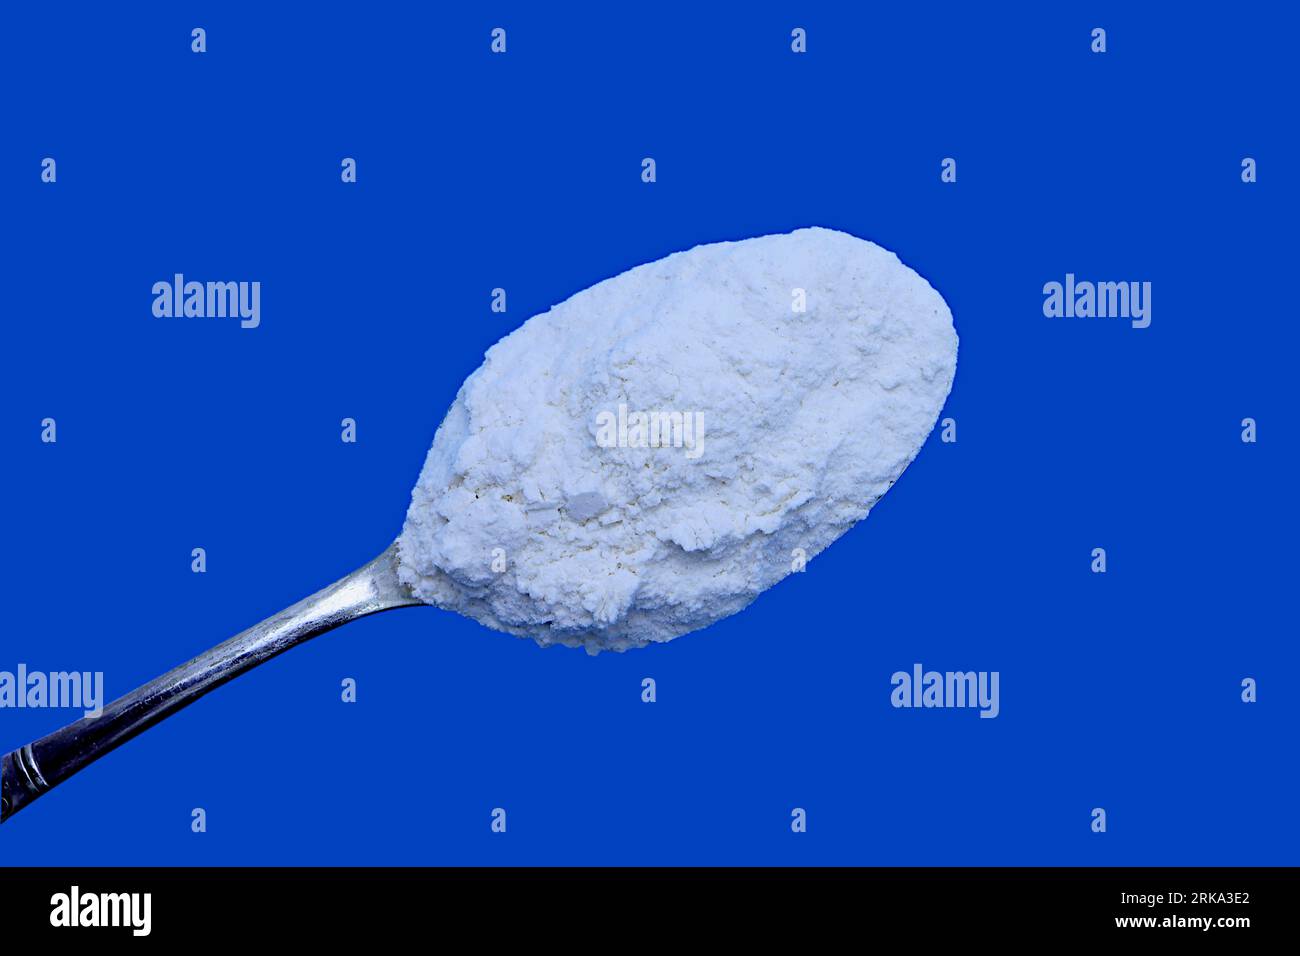 Home baking ingredients: Still life of plain white flour. Blue background, negative space. Stock Photo